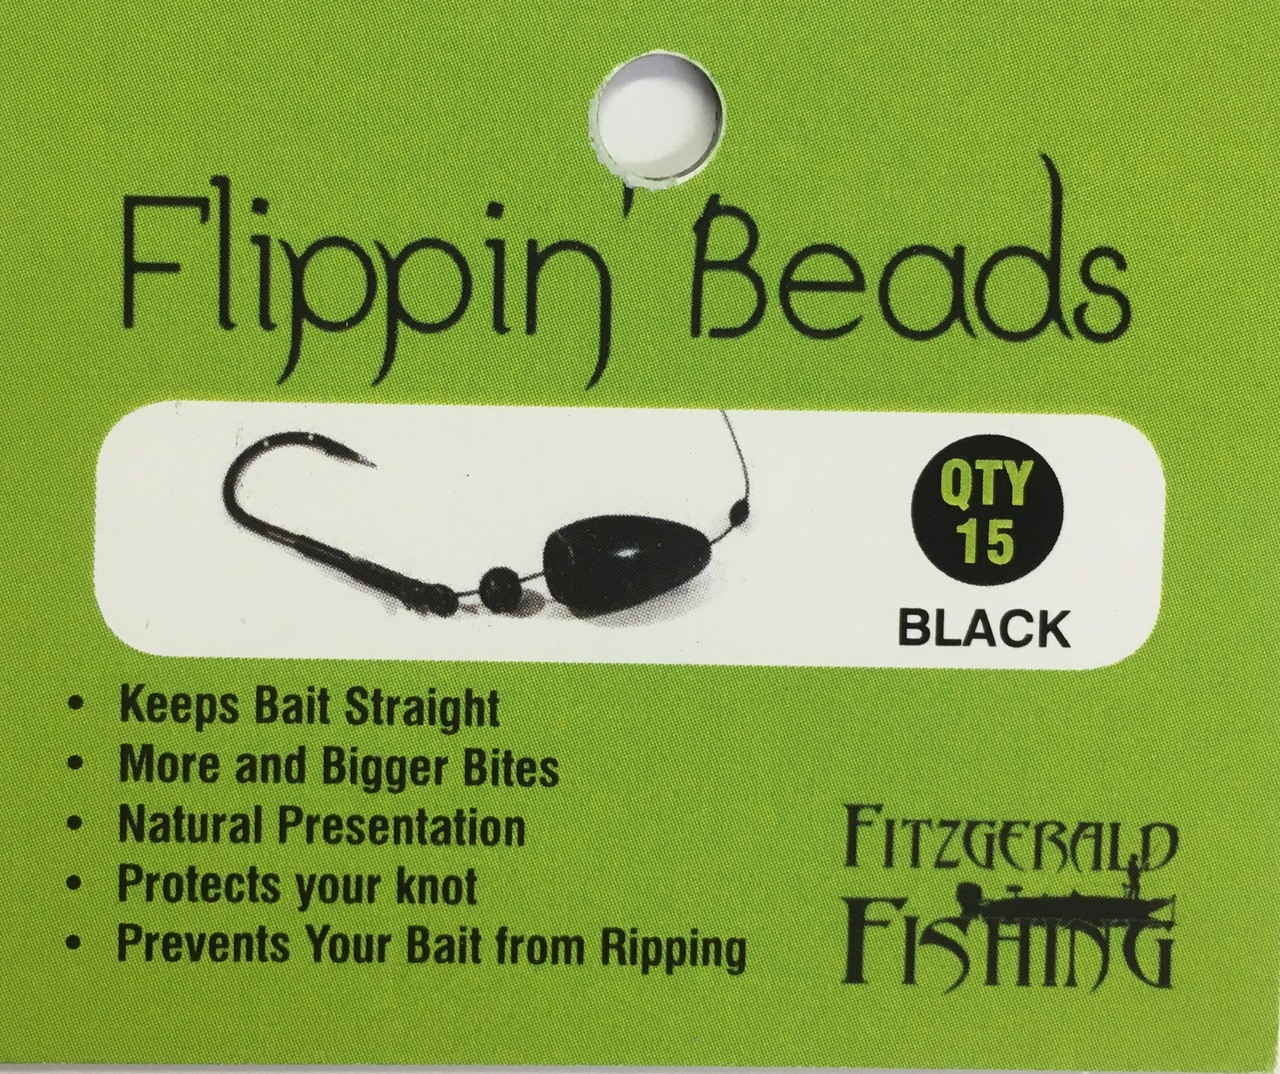 Fitzgerald Fishing Flippin' Beads